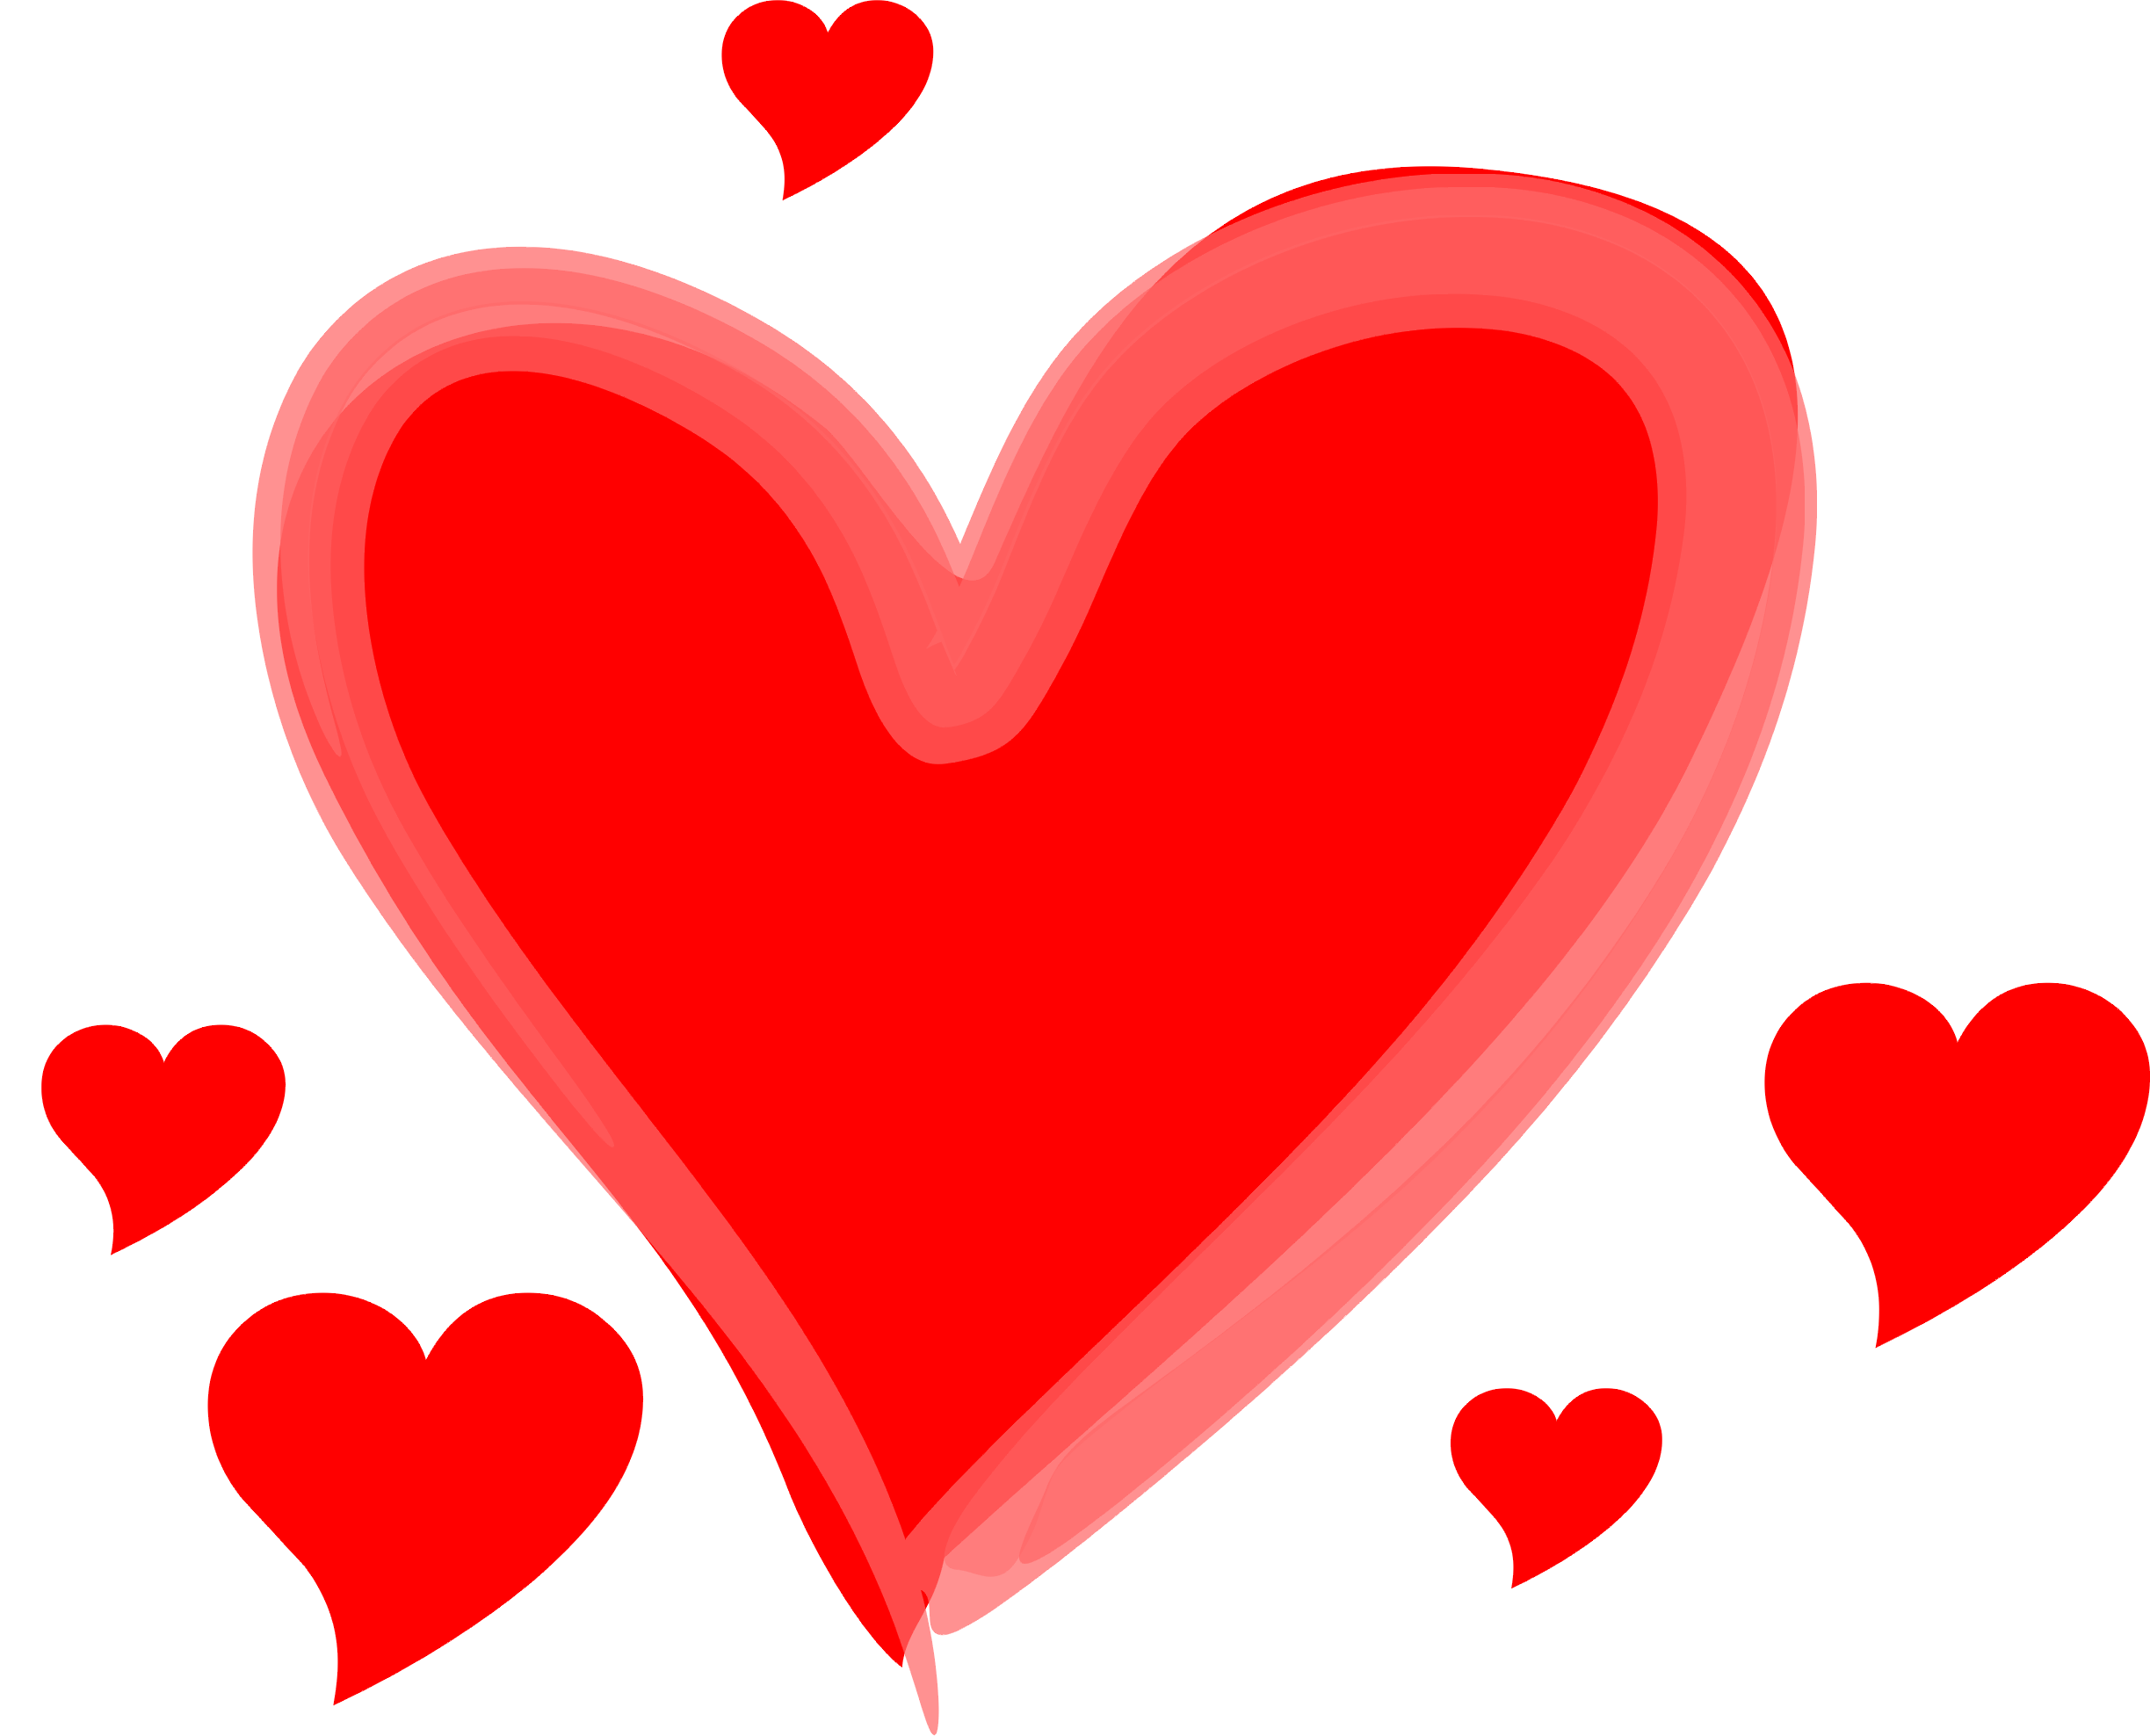 File:Love heart uidaodjsdsew.gif - Wikipedia